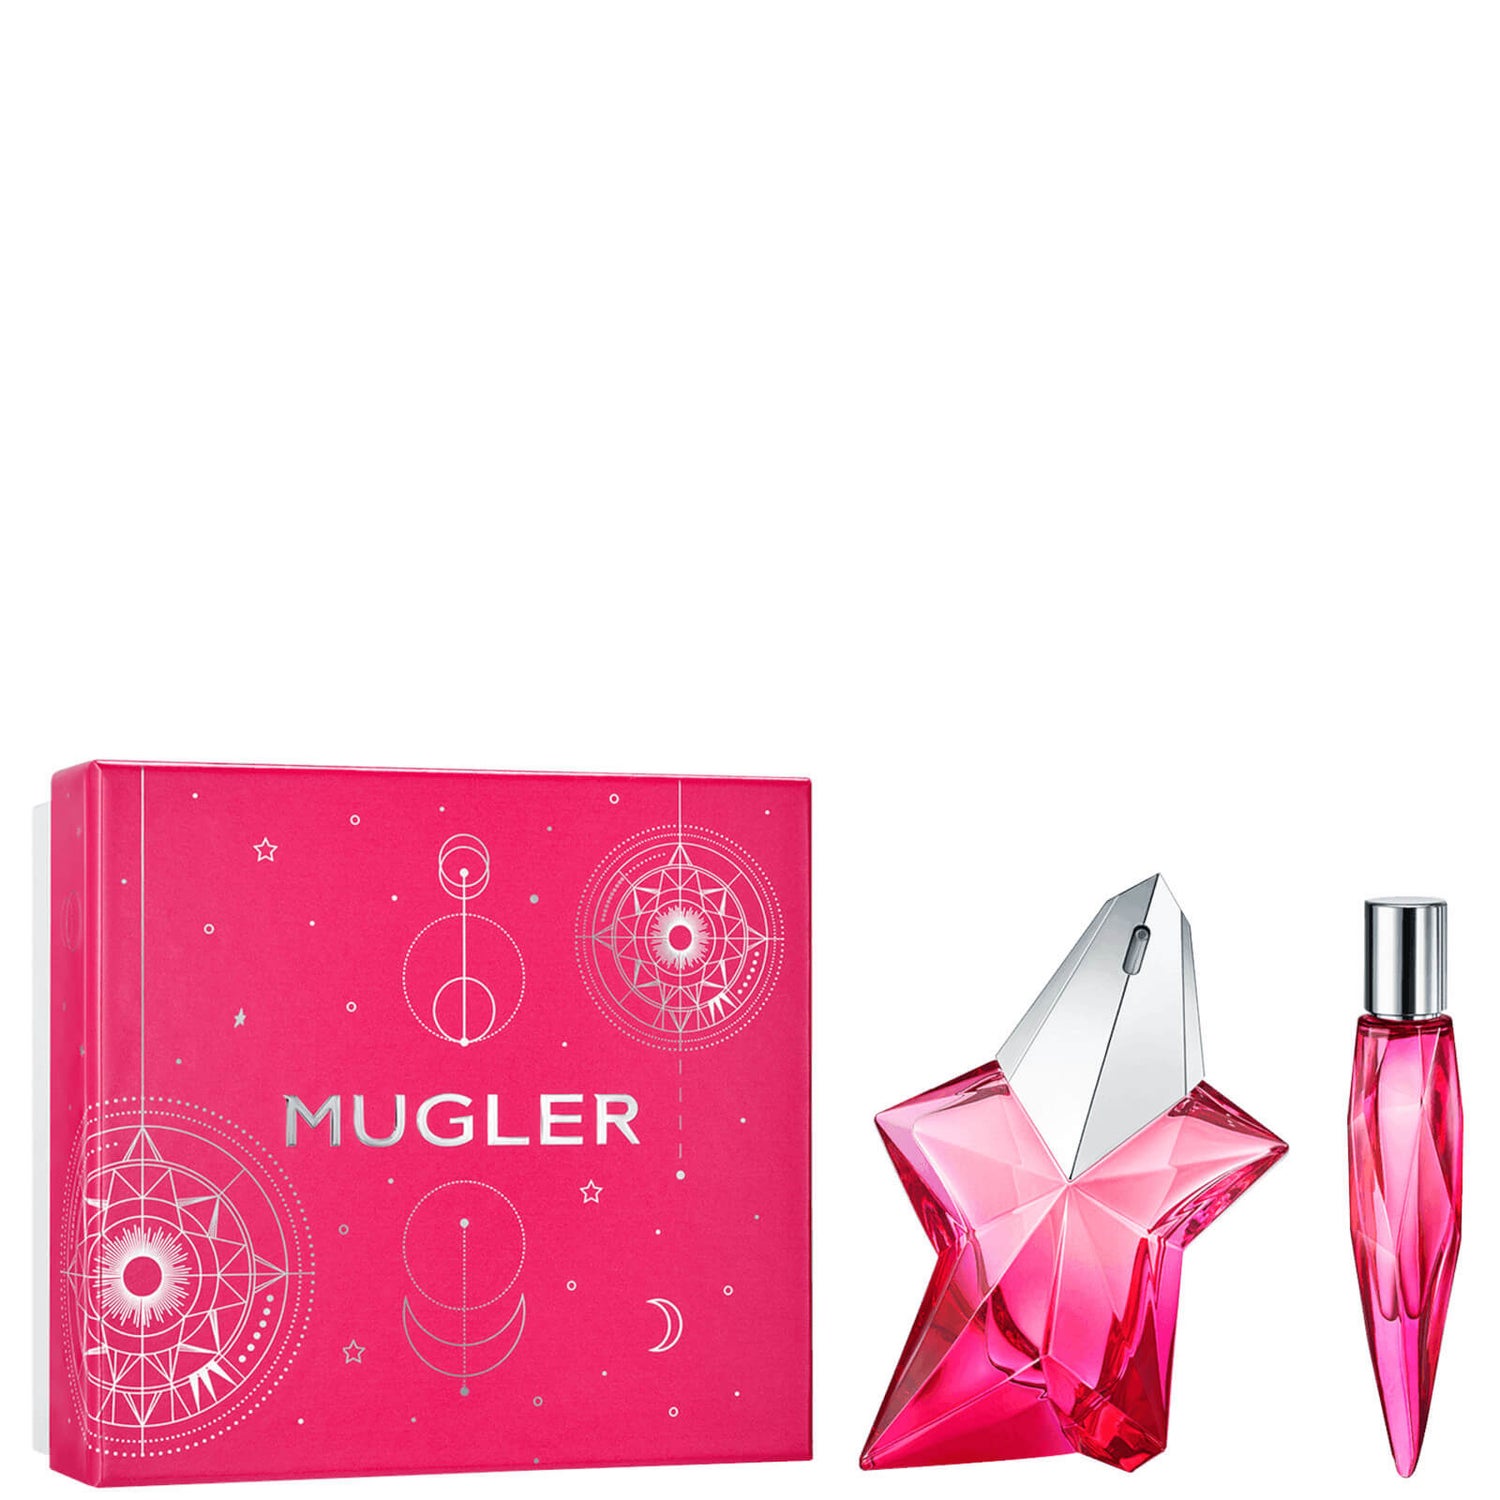 Mugler Angel Nova Eau de Parfum Gift Set 30ml (Worth £70.00)